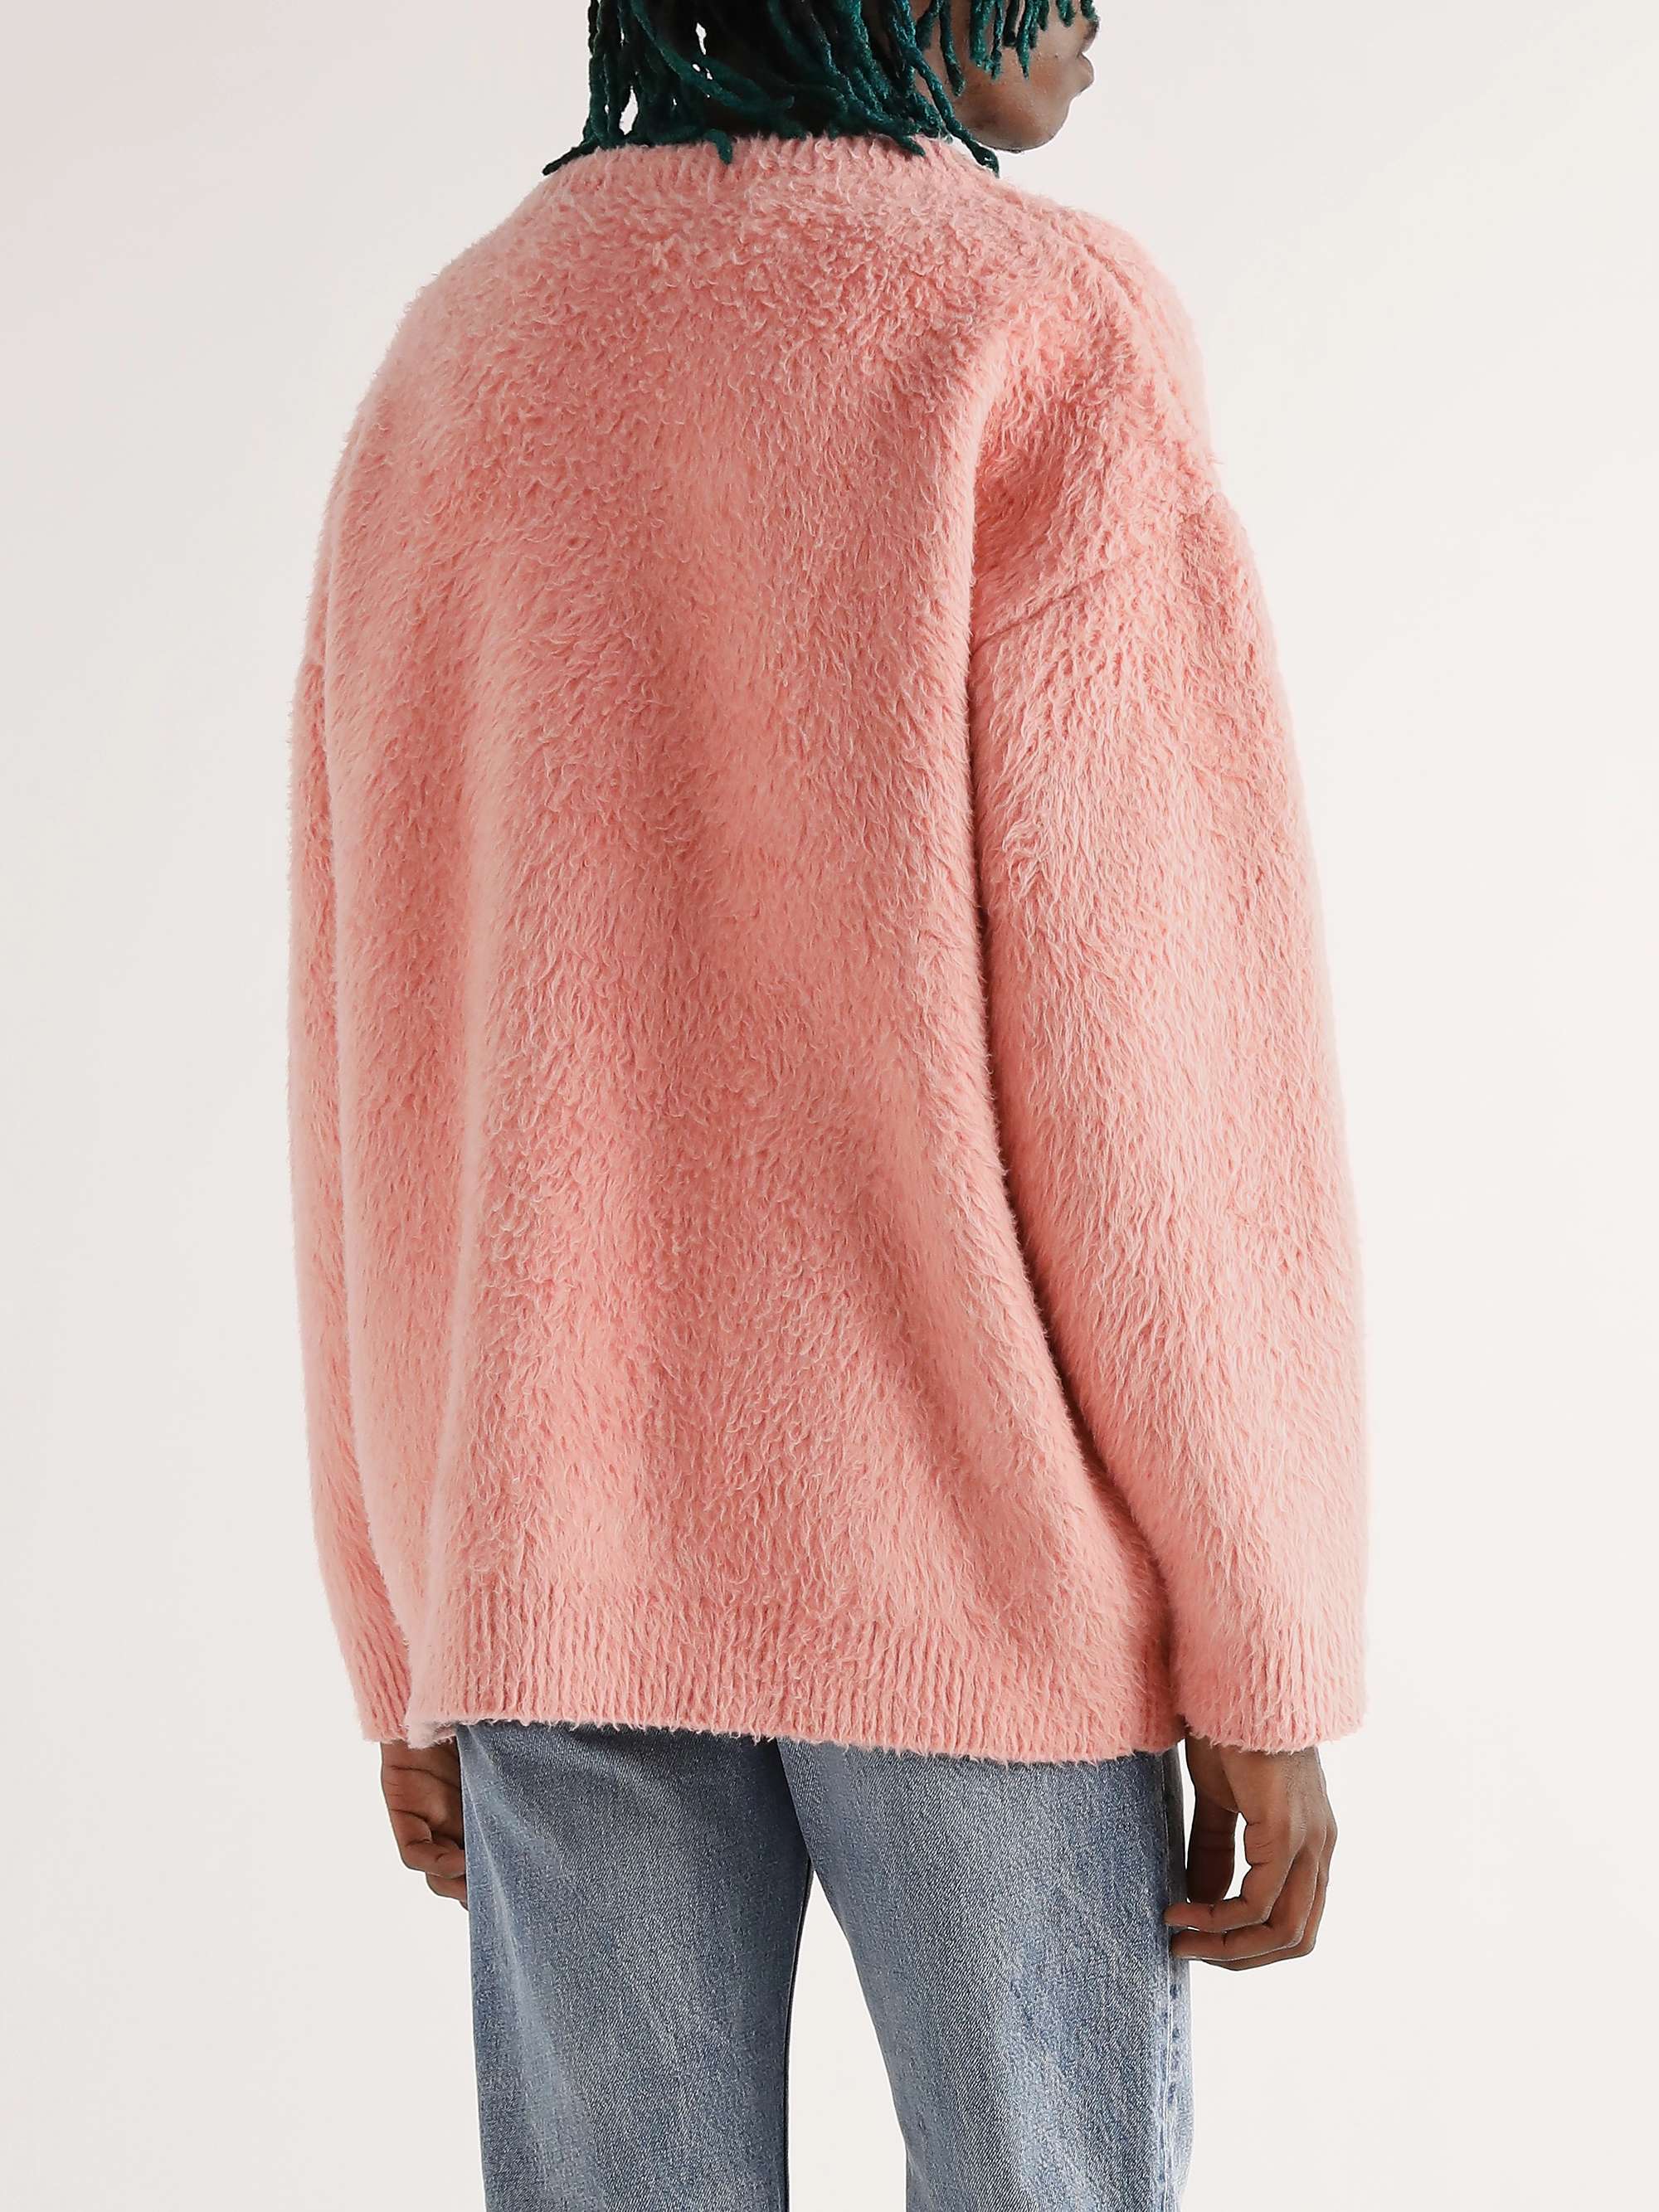 Brushed Cotton-Blend Jacquard Sweater